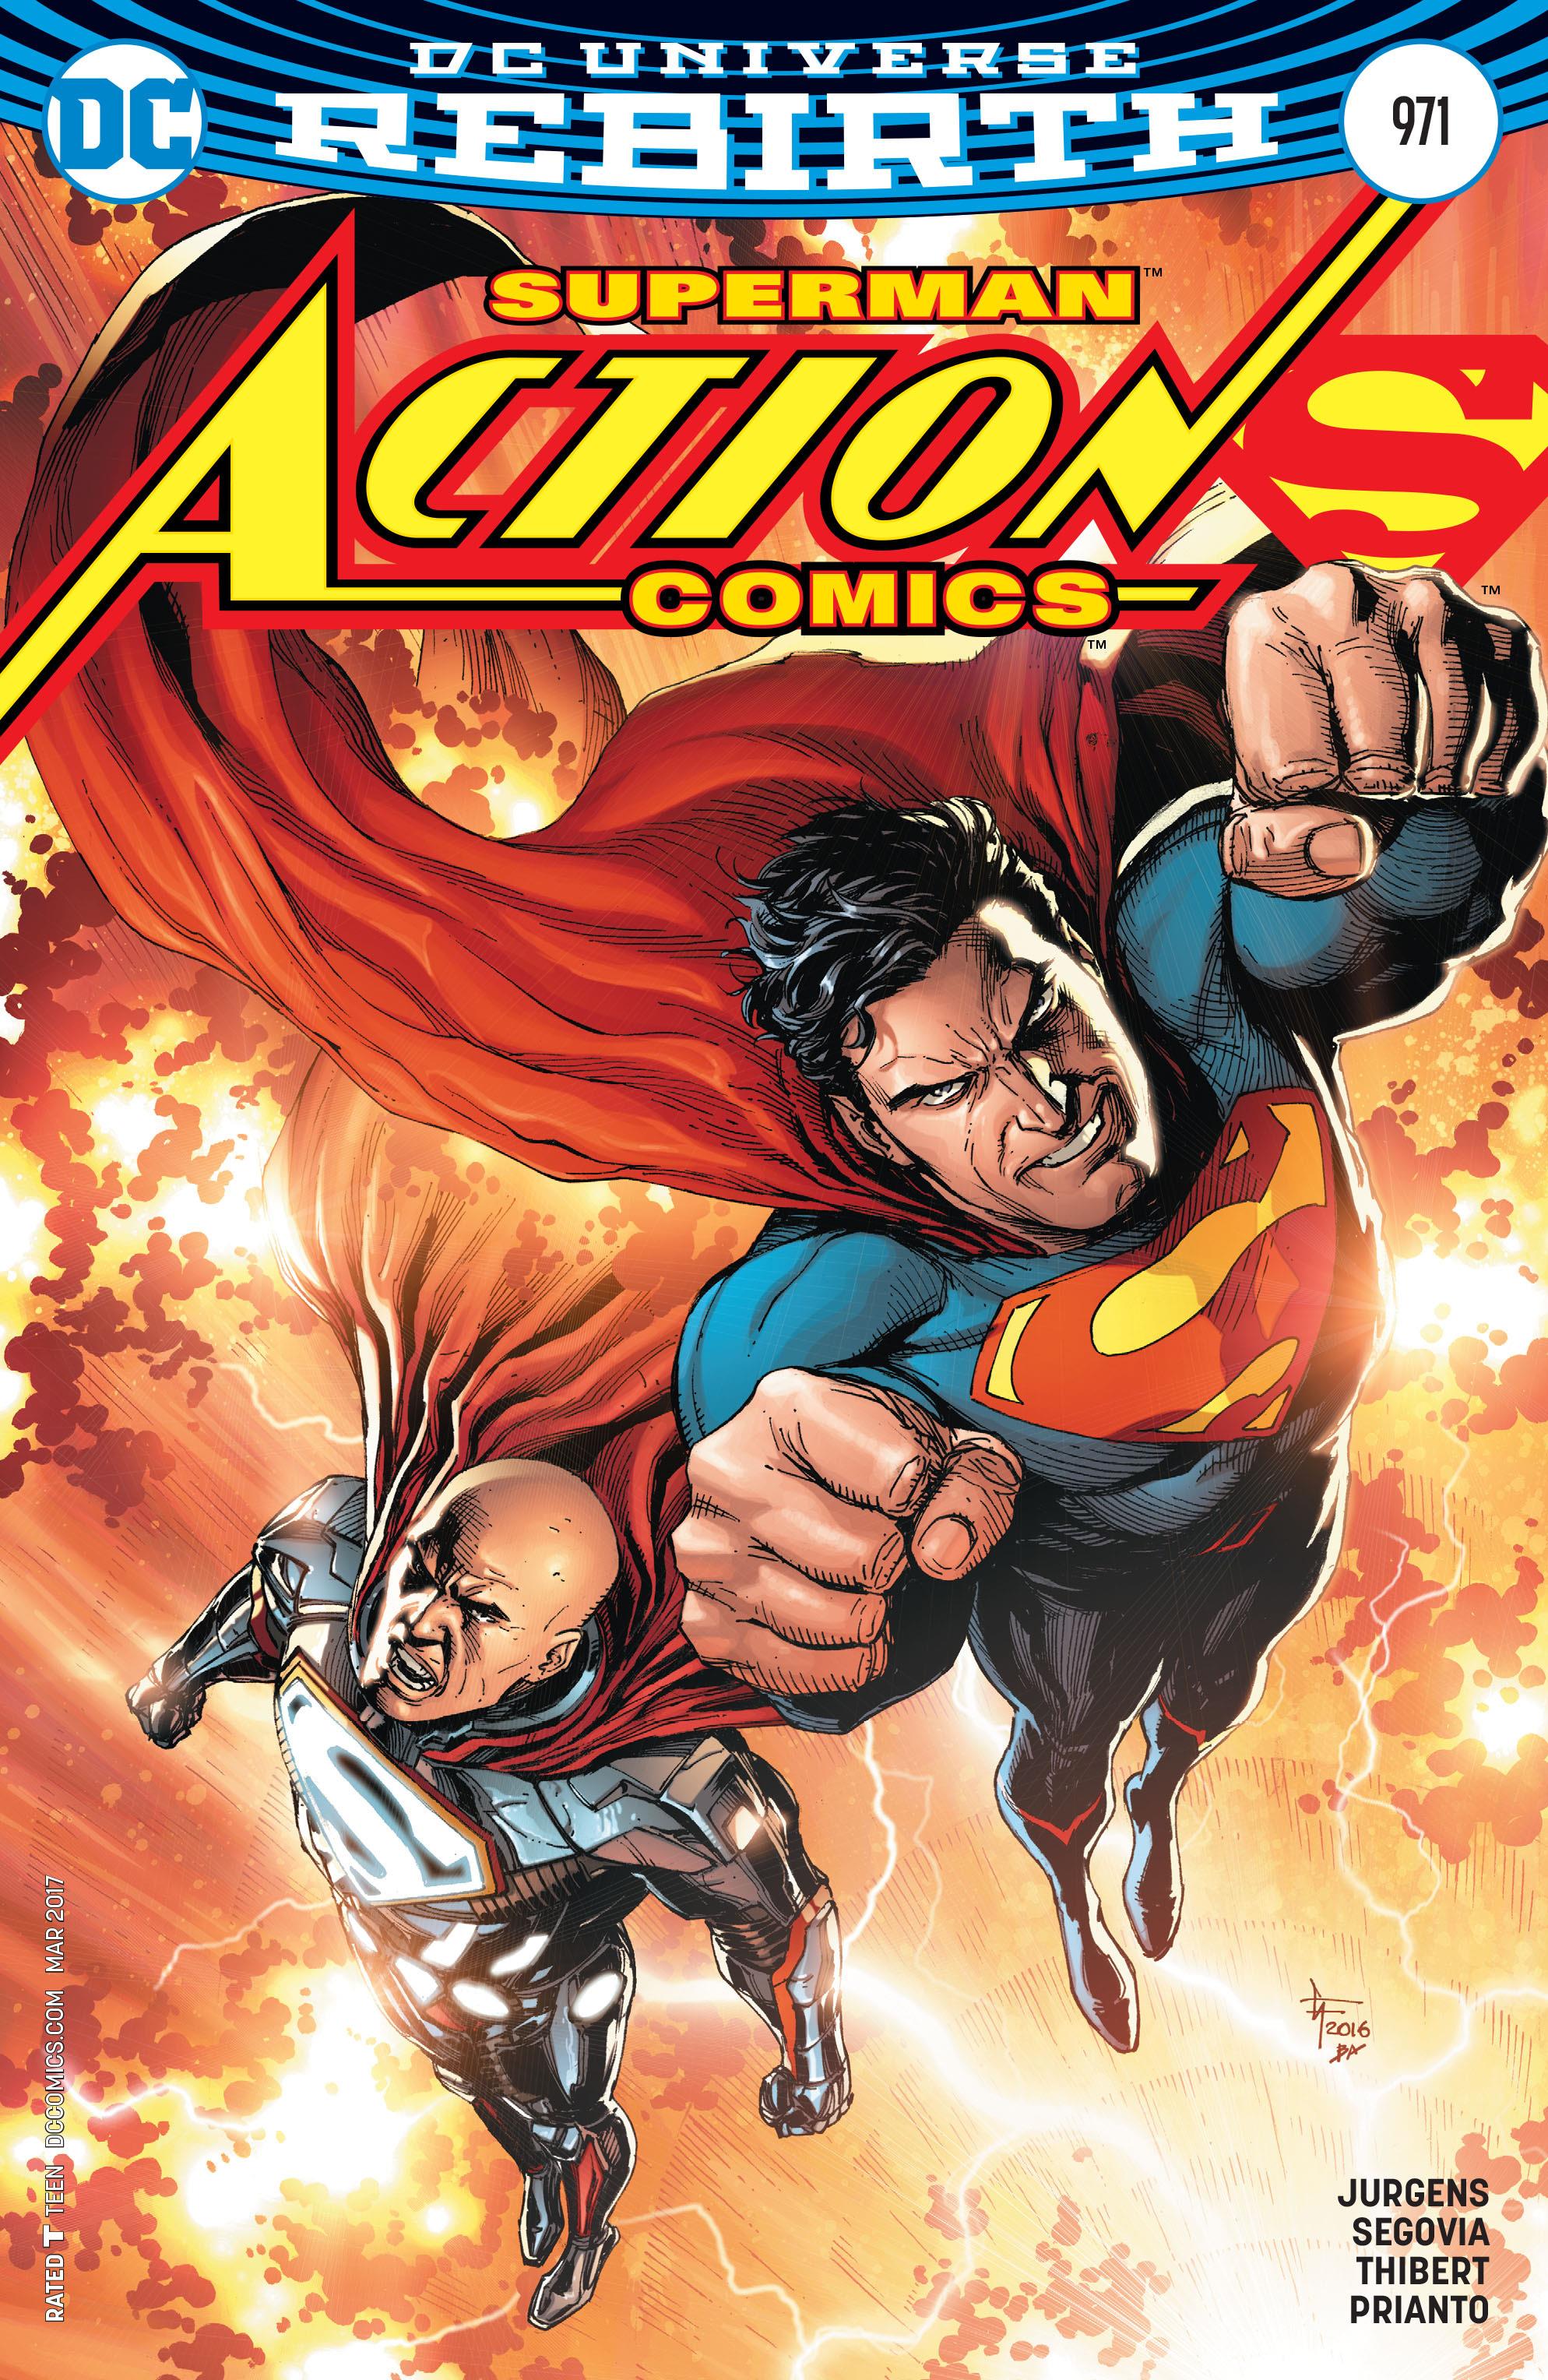 Action Comics #971 (2017)